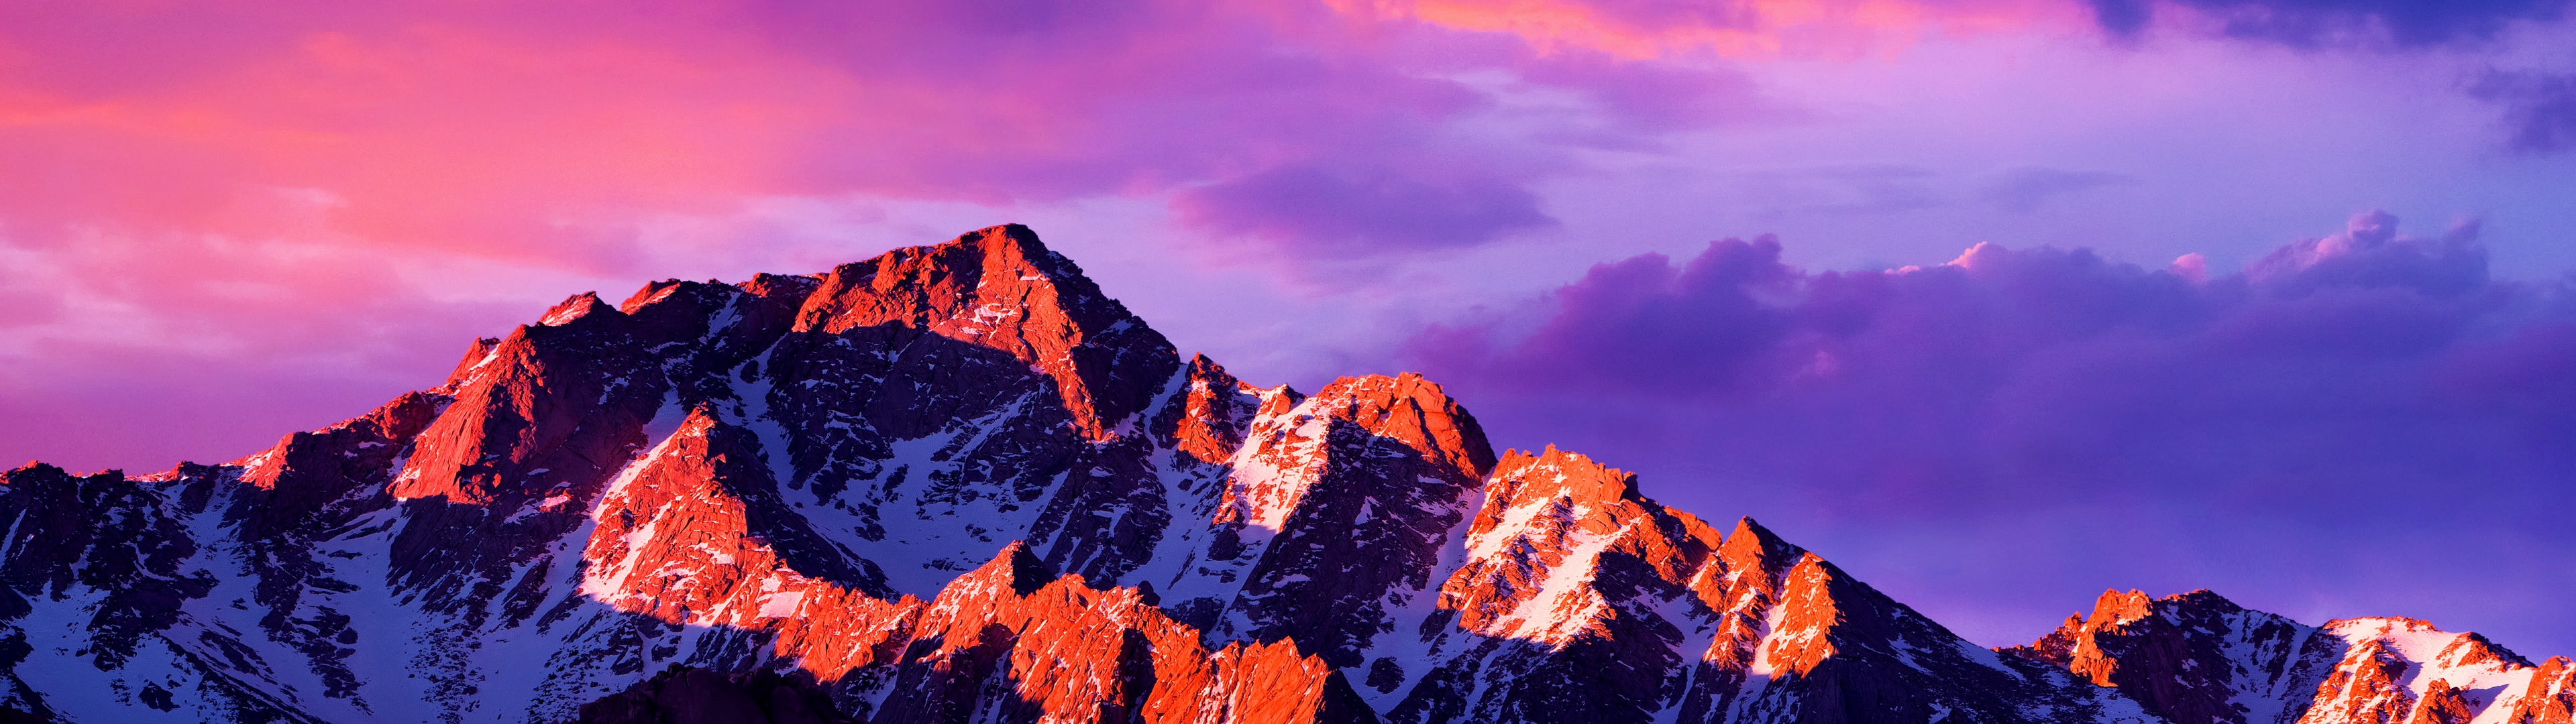 macOS Sierra Wallpaper 4K, Glacier mountains, Nature, #6420